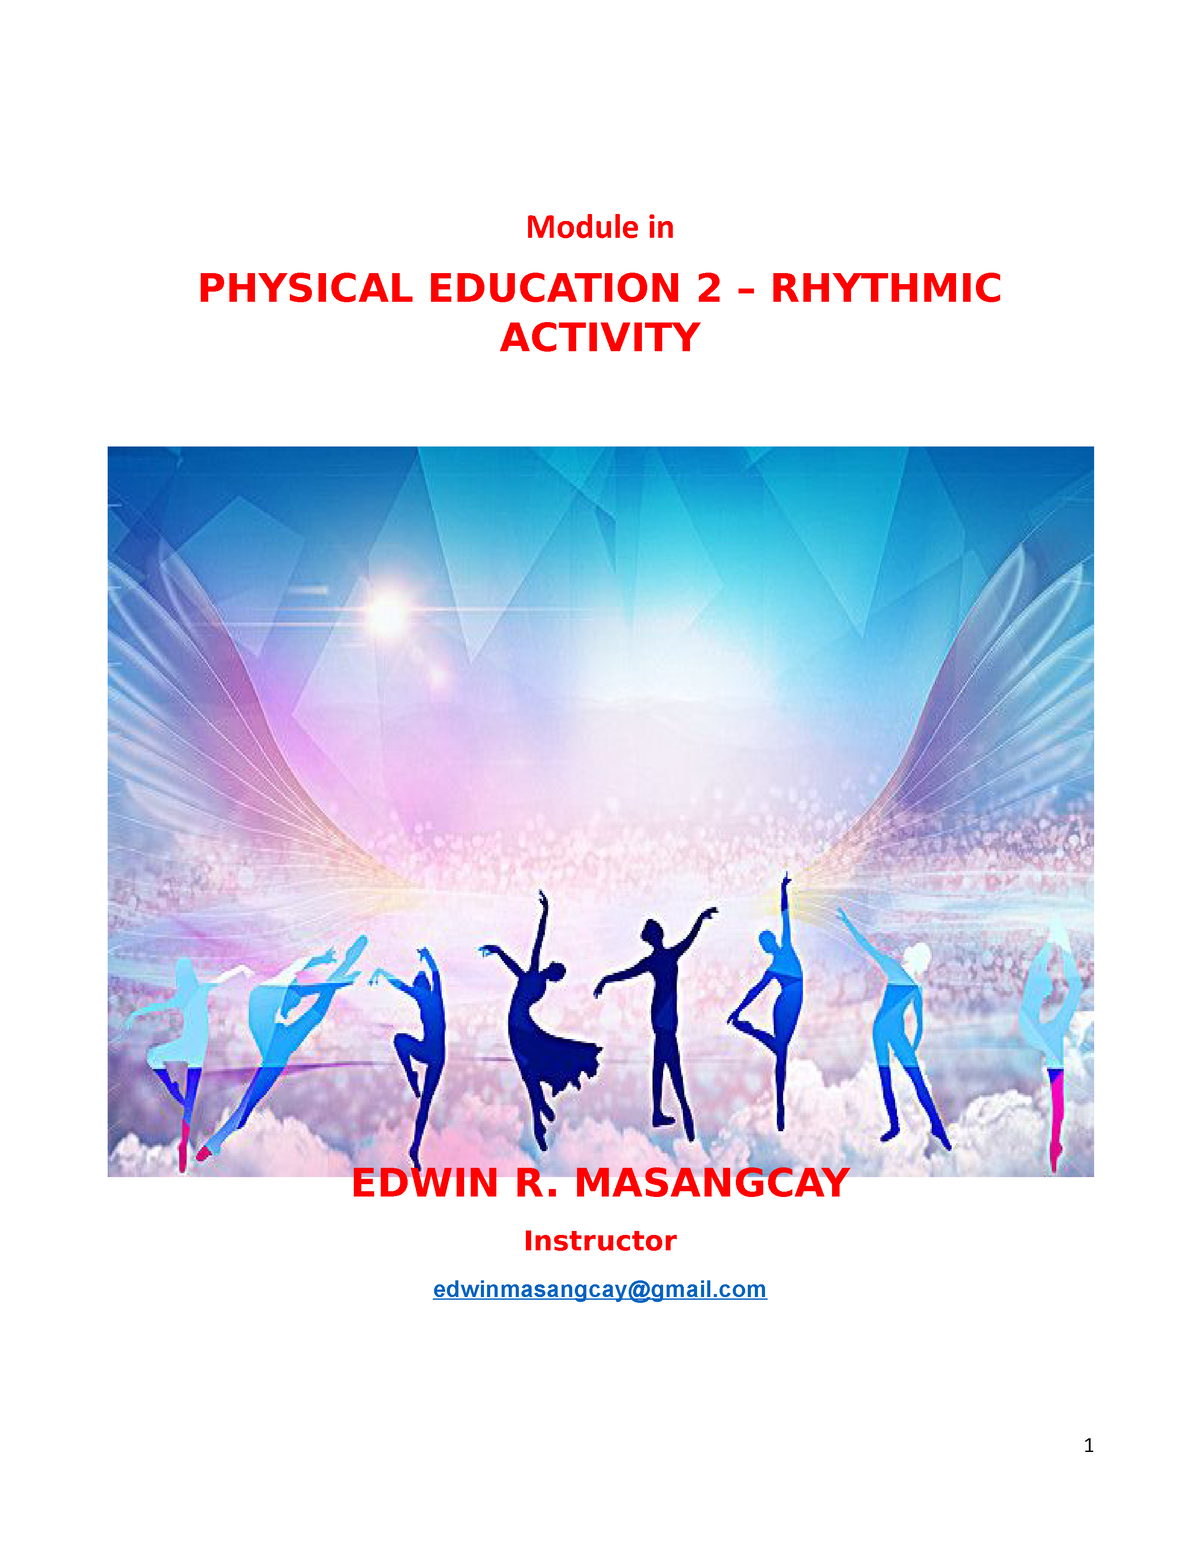 fundamentals of rhythmic activities